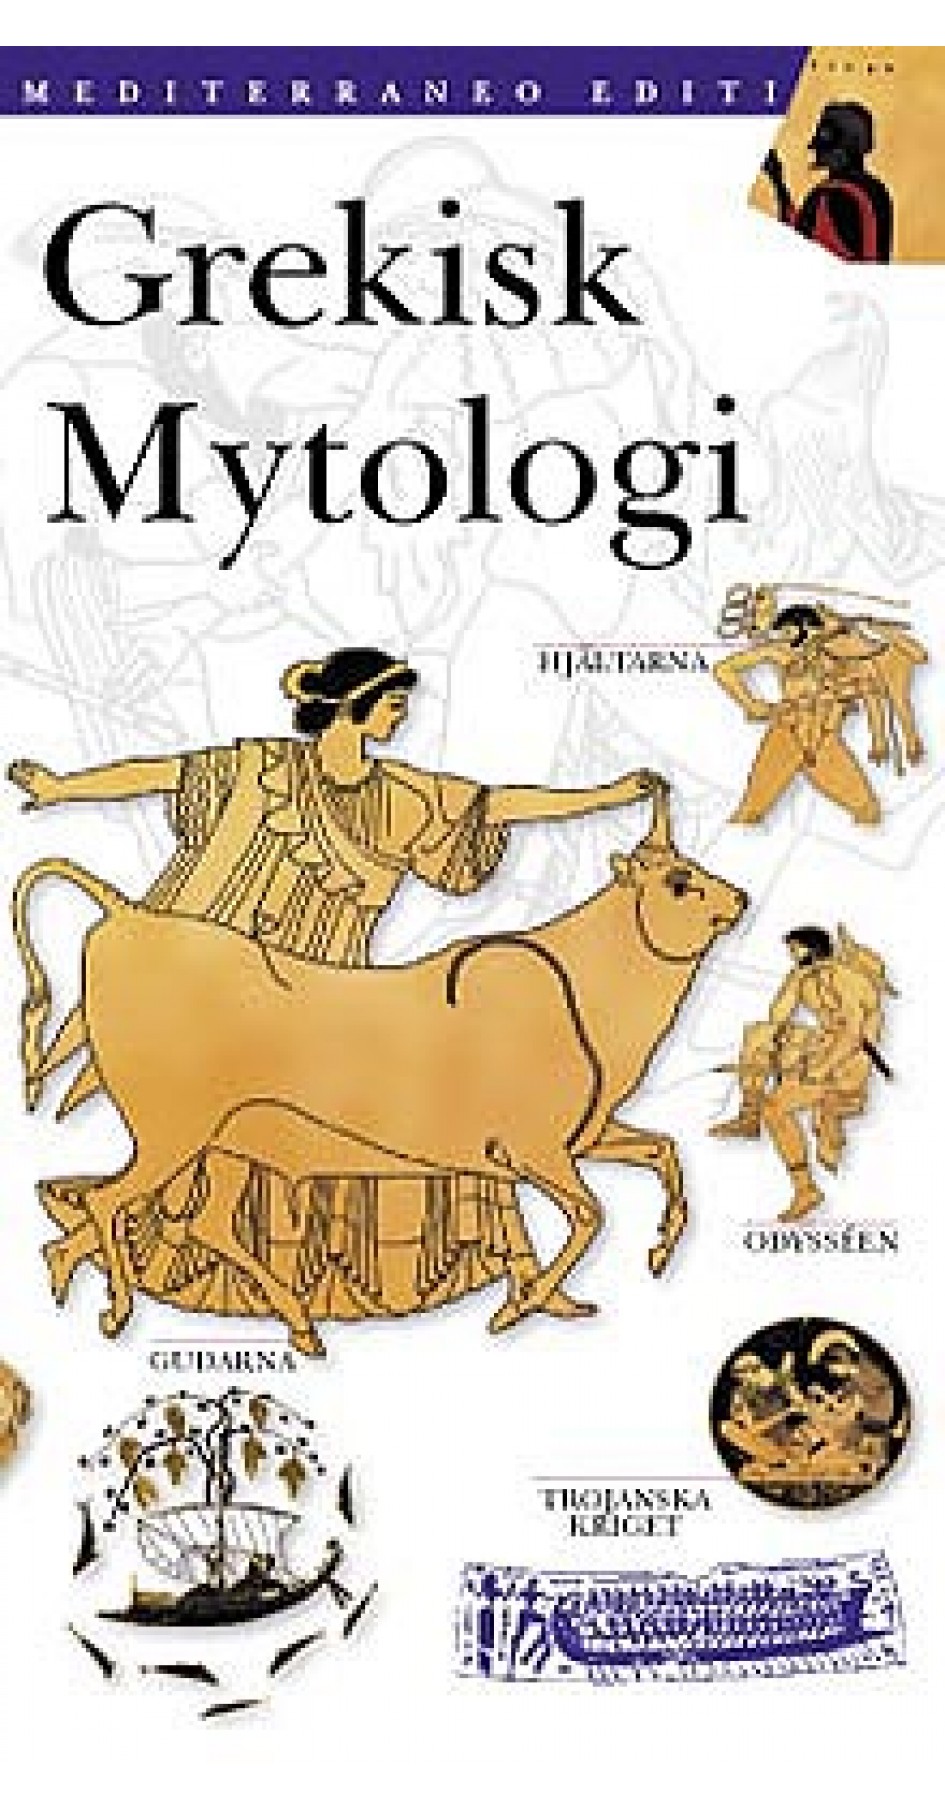 Grekisk Mytologi